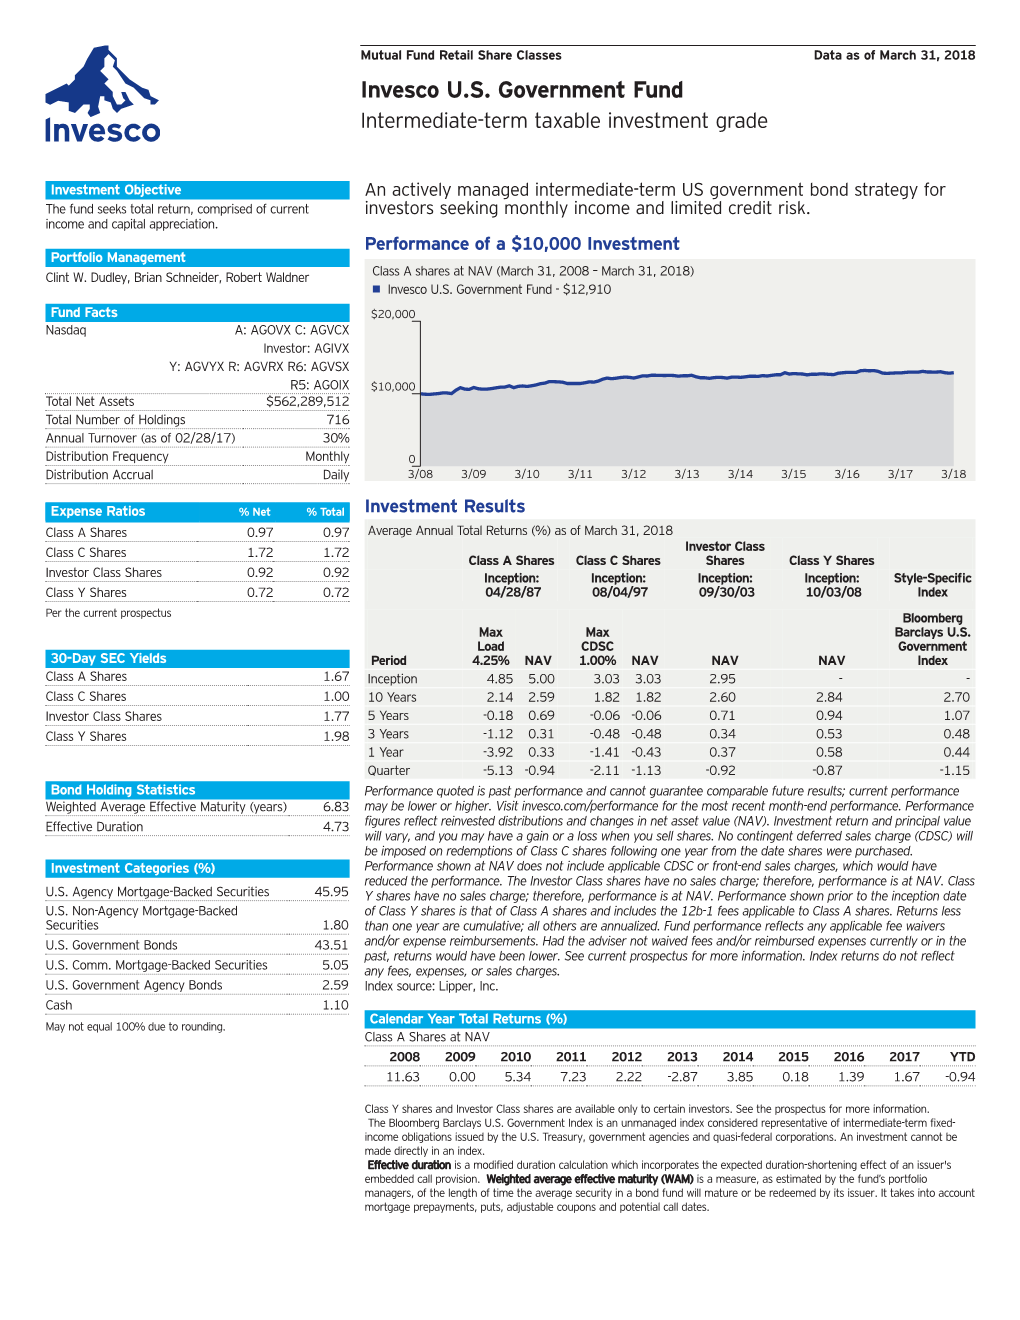 Invesco U.S. Government Fund Fact Sheet (PDF)